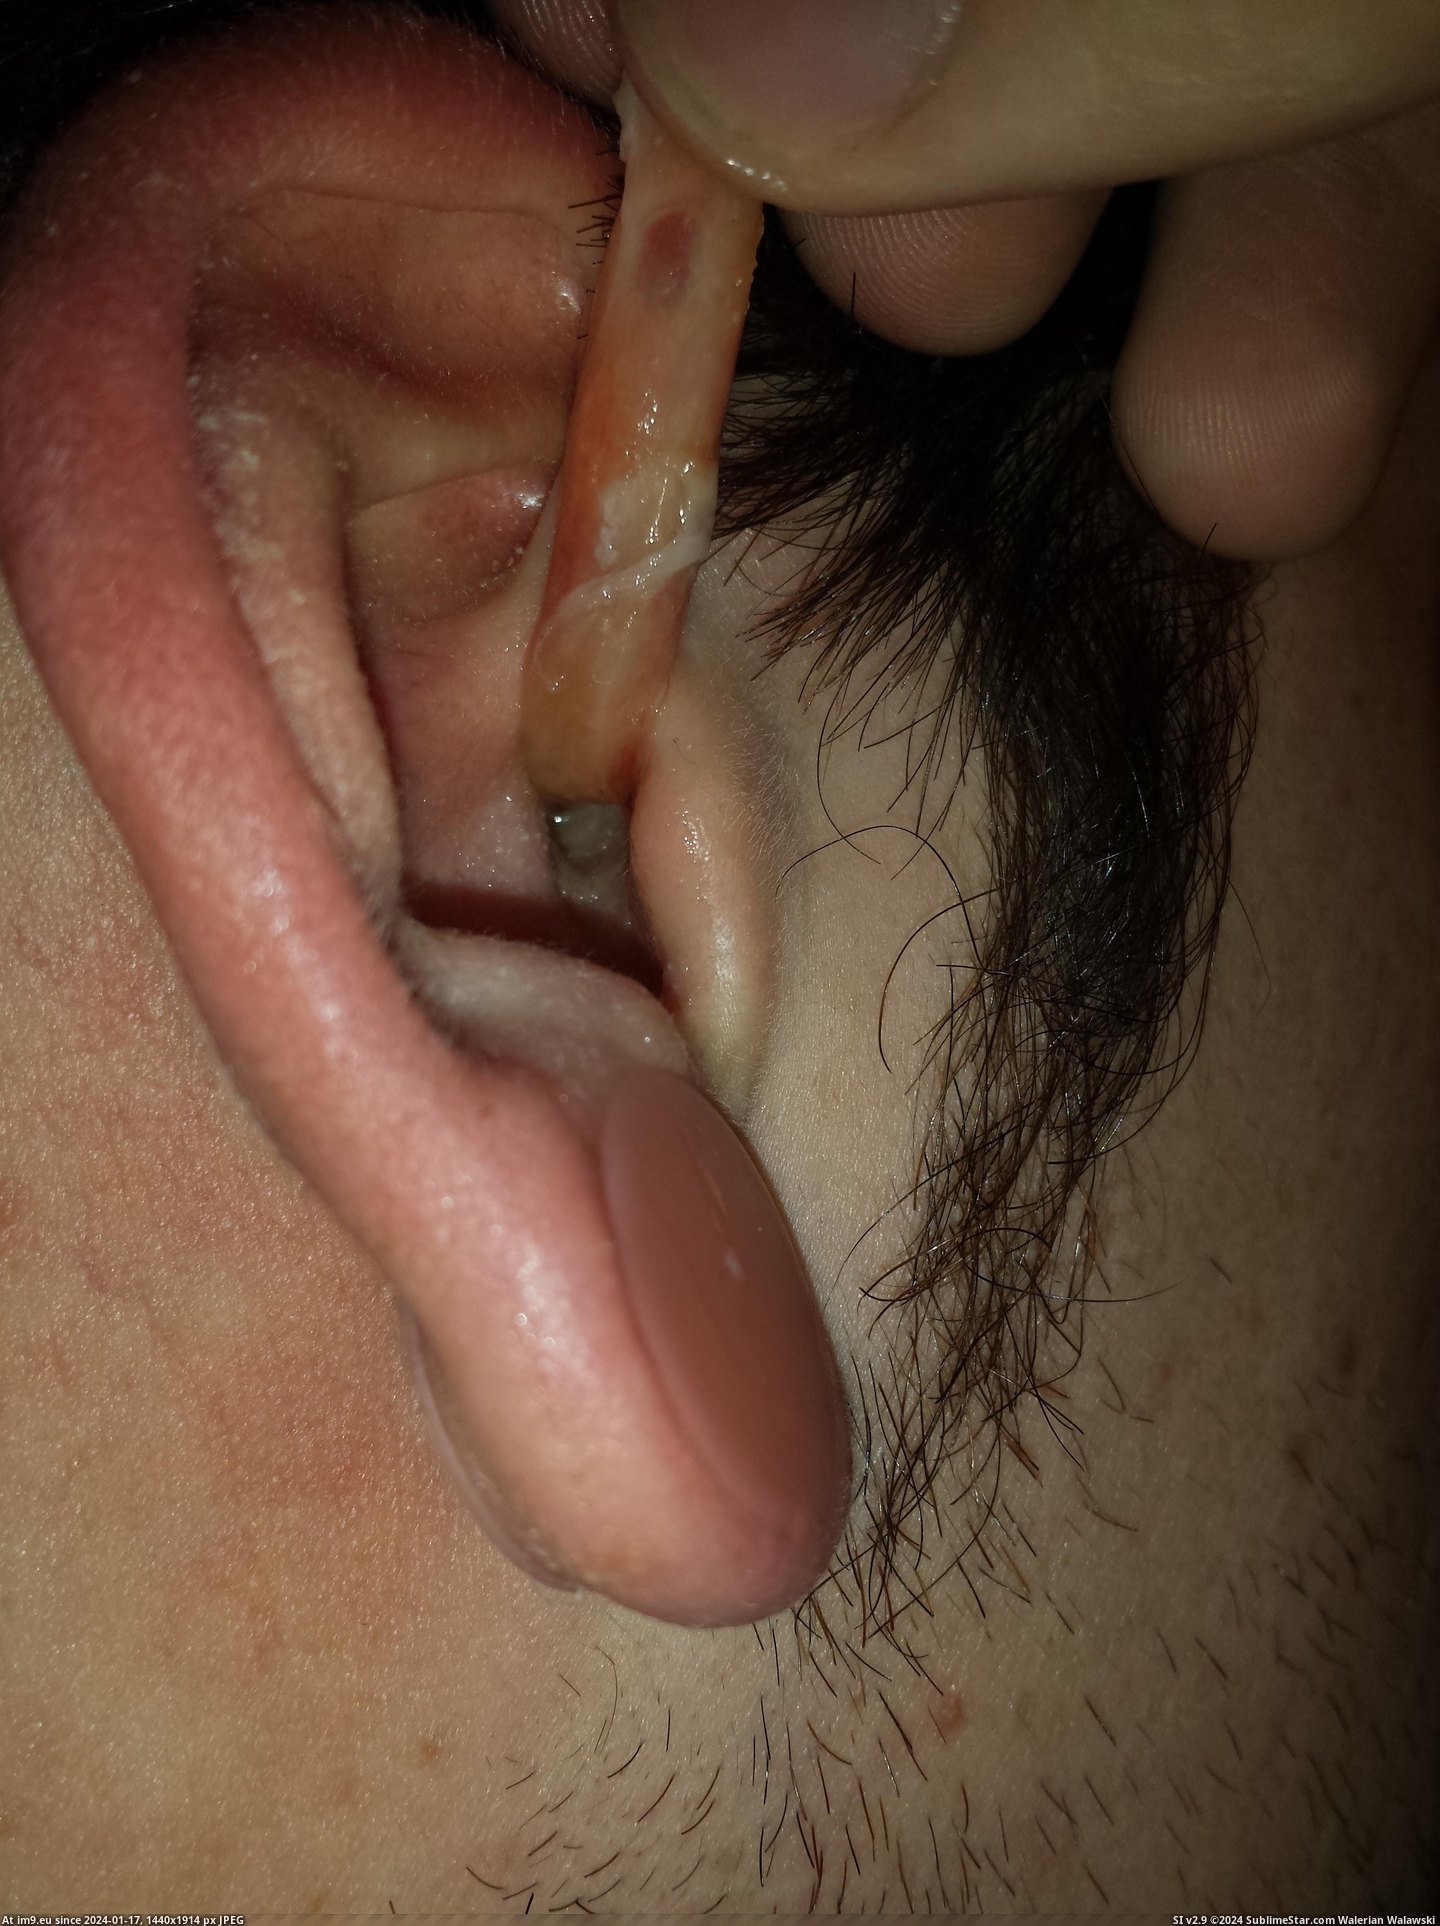 #Wtf #Ear #Infection #Crazy [Wtf] My crazy ear infection 1 Pic. (Bild von album My r/WTF favs))